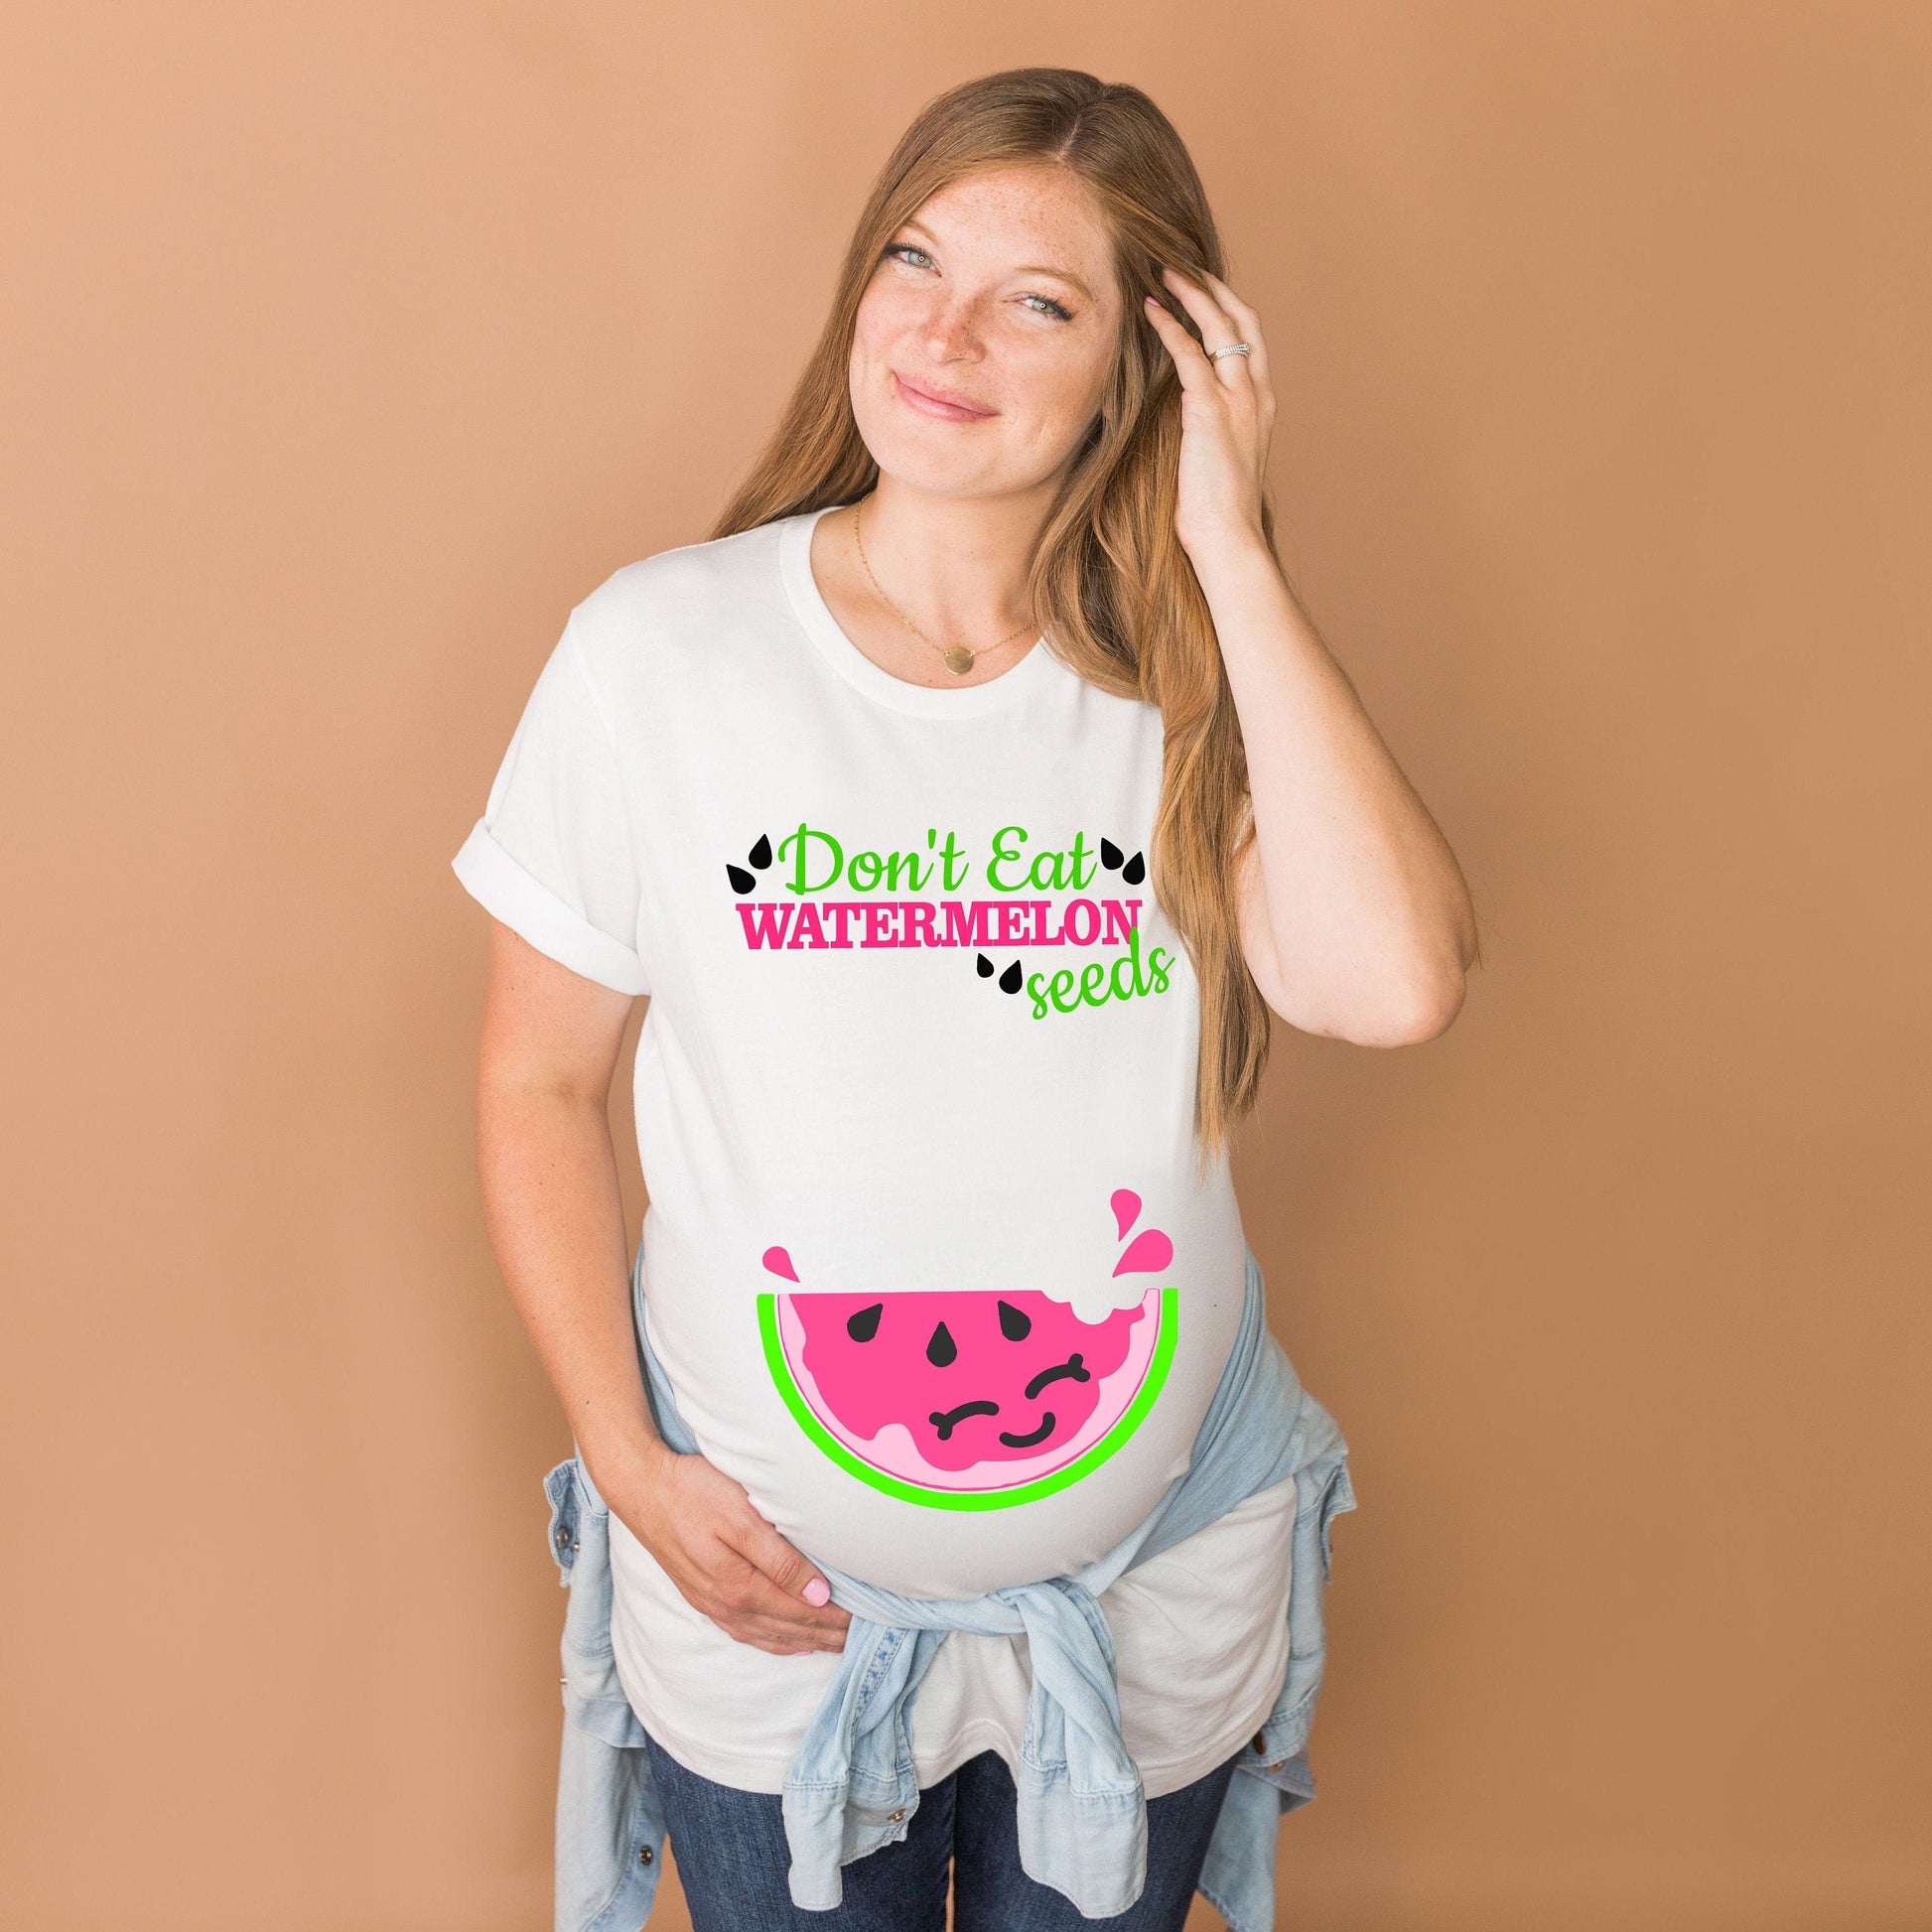 Don't Eat Watermelon Seeds t-shirt - pregnancy announcement shirt - pregnancy shirt - maternity shirt - cute pregnancy announcement